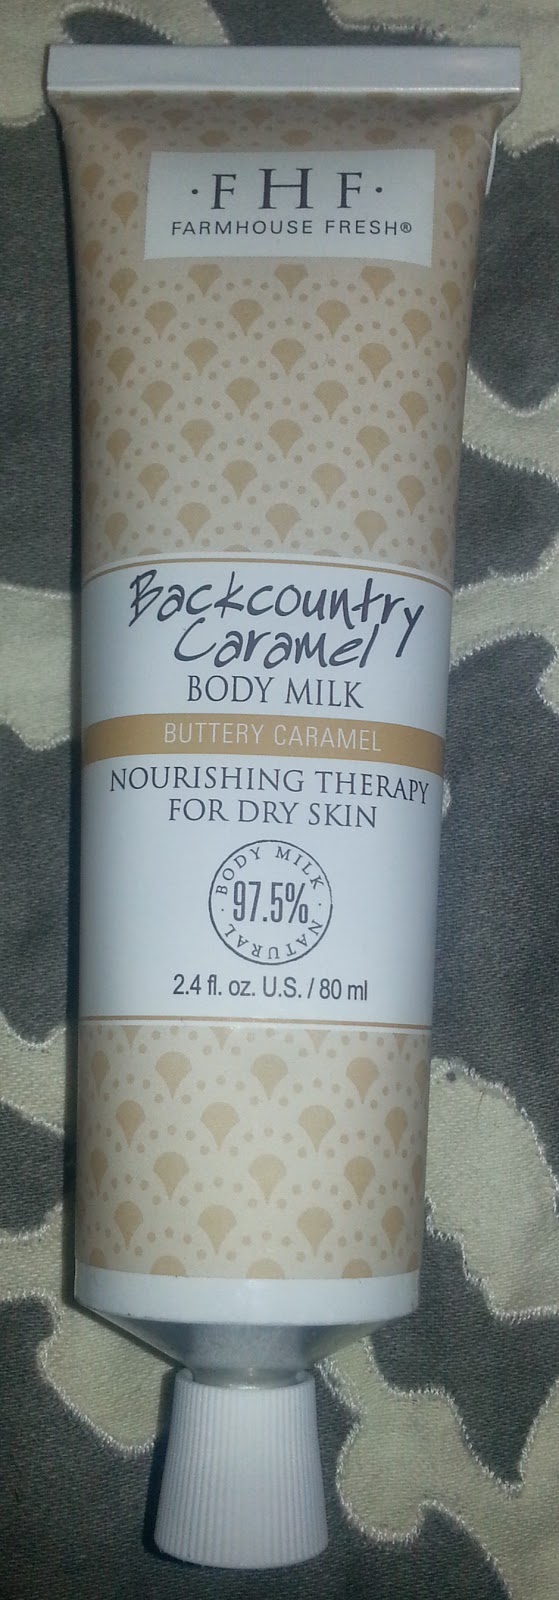 Backcountry Caramel Body Milk Travel Lotion